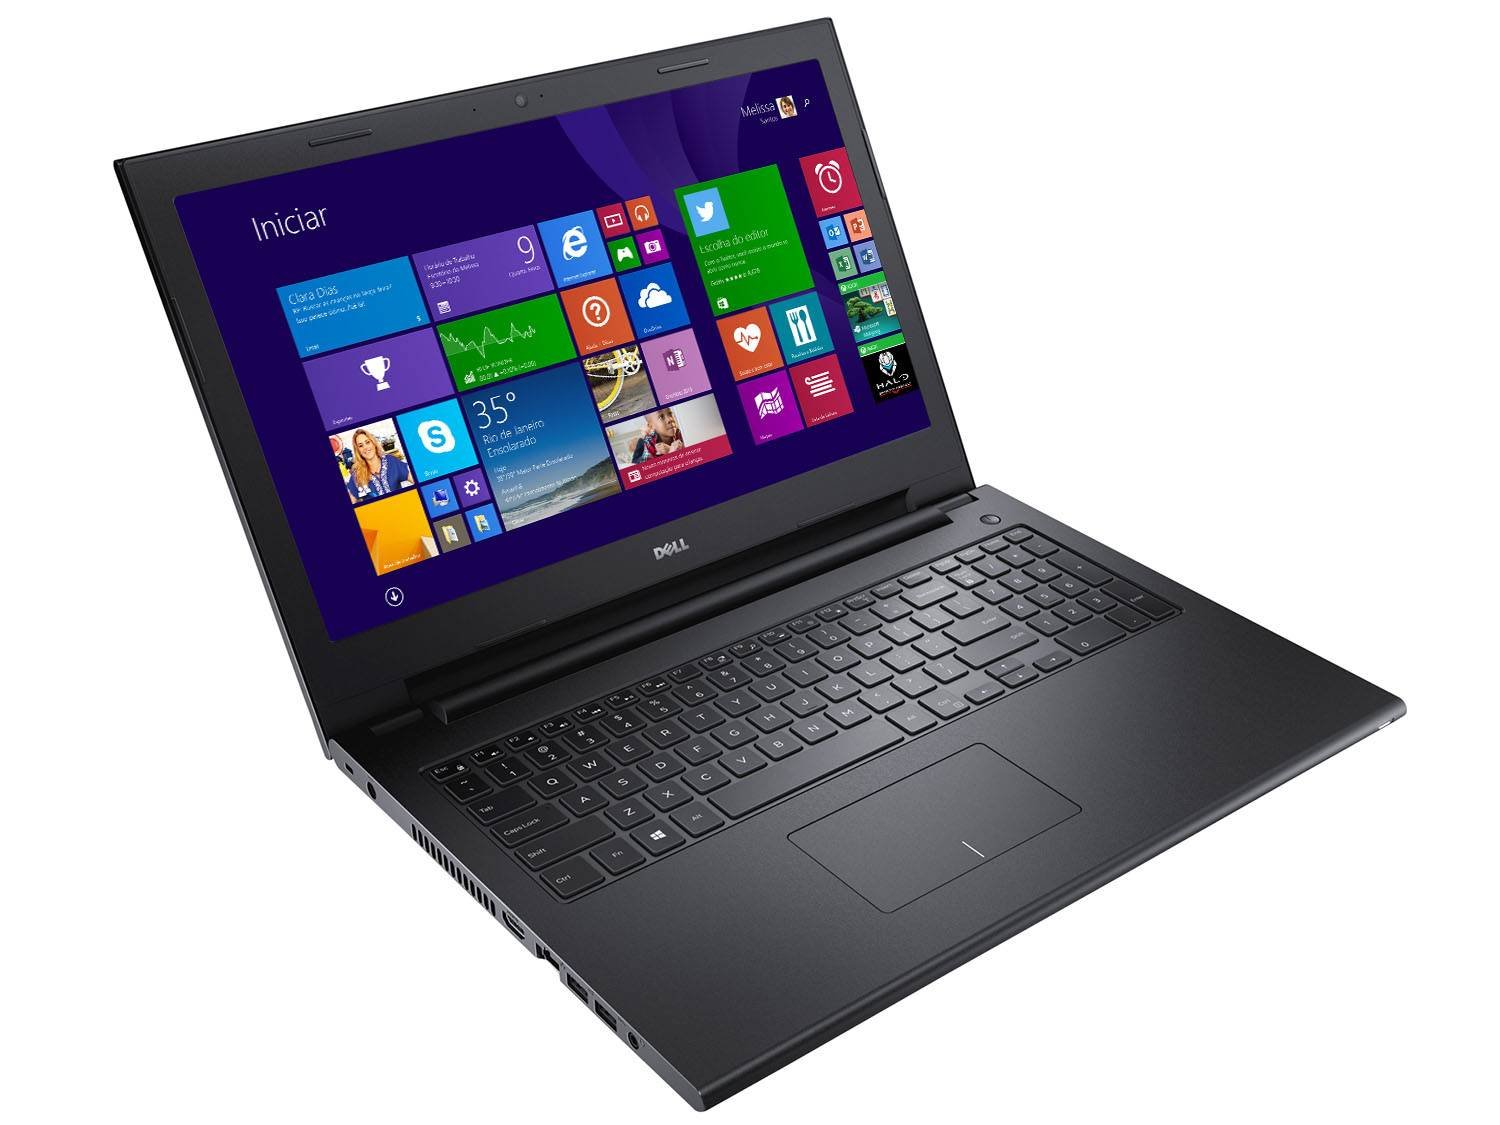 Notebook Dell Inspiron 3000 I15-3542-A30 c/ Intel Core i5 4GB 1TB